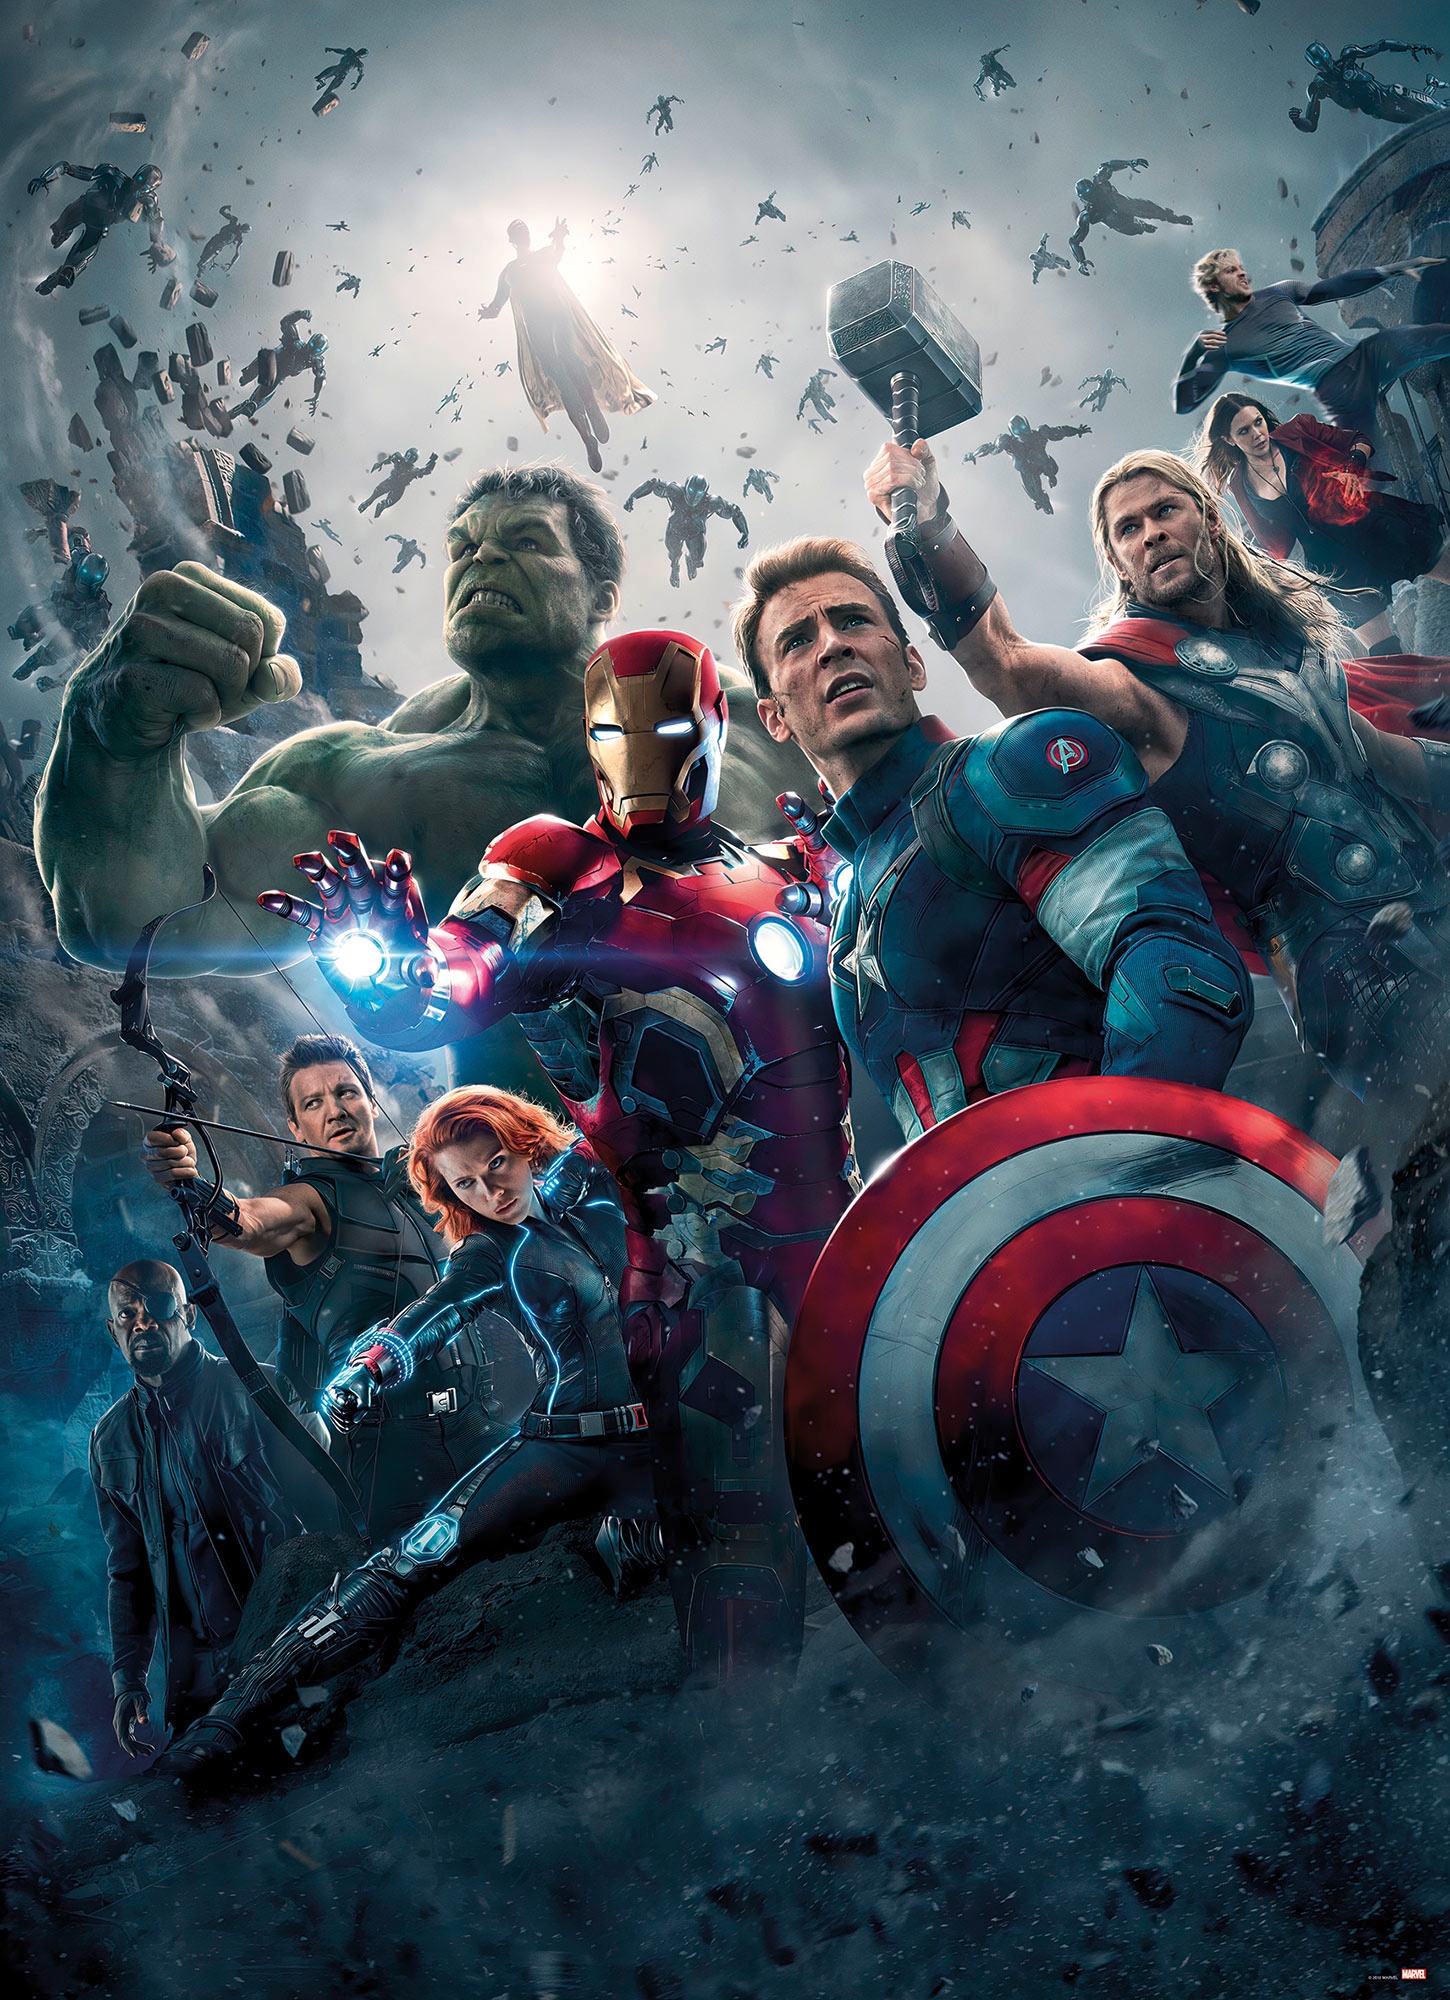 Fototapete »Avengers Age of Ultron Movie Poster«, 184x254 cm (Breite x Höhe),...